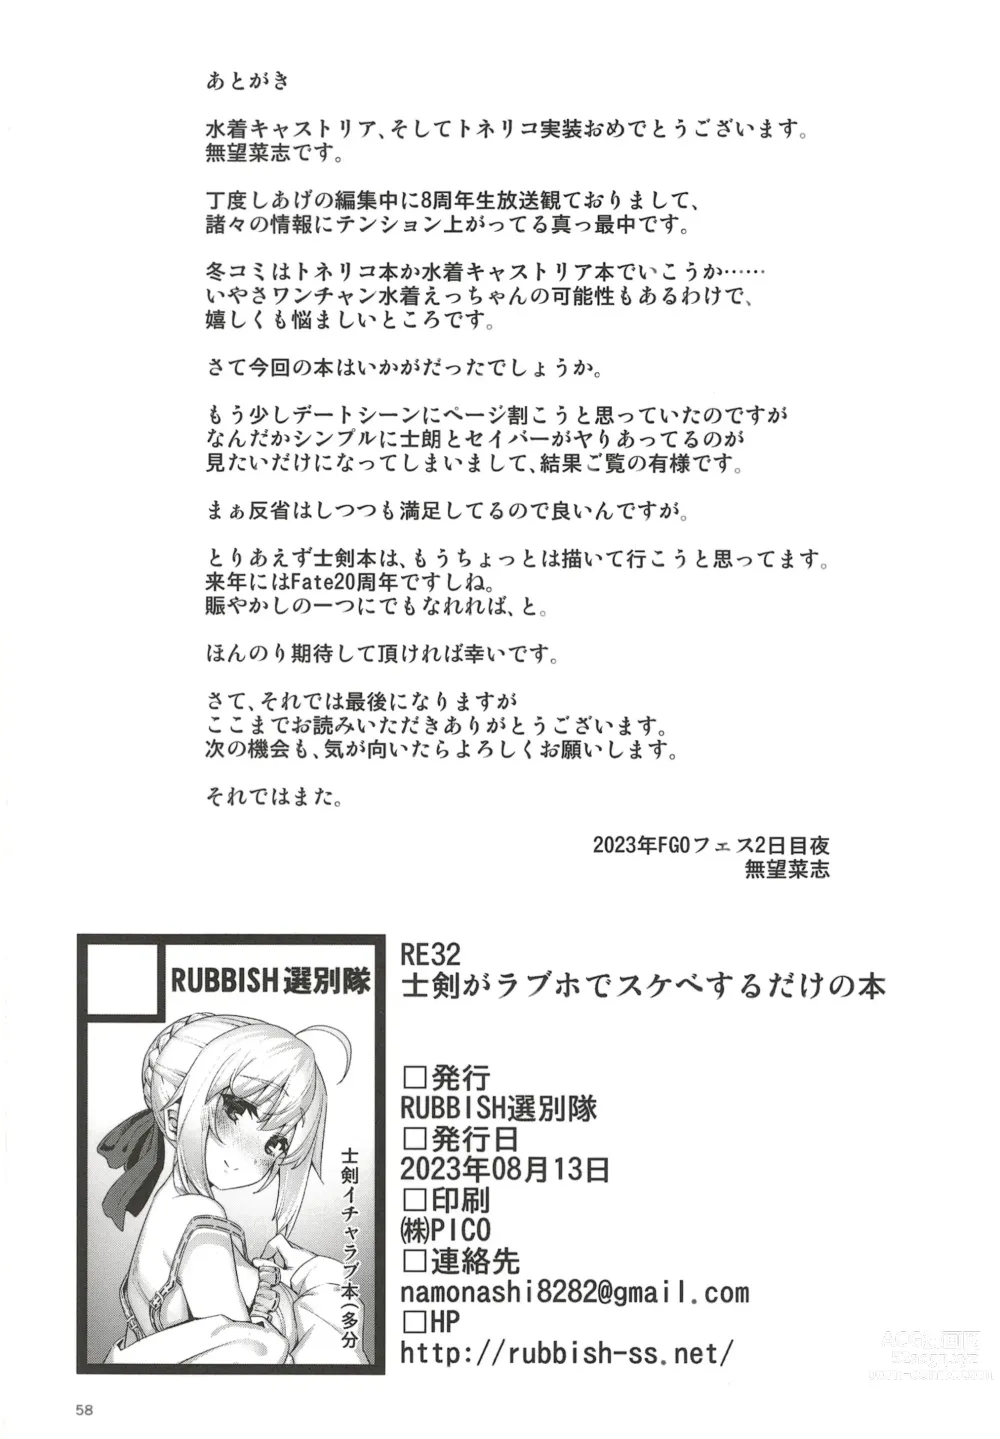 Page 58 of doujinshi RE32